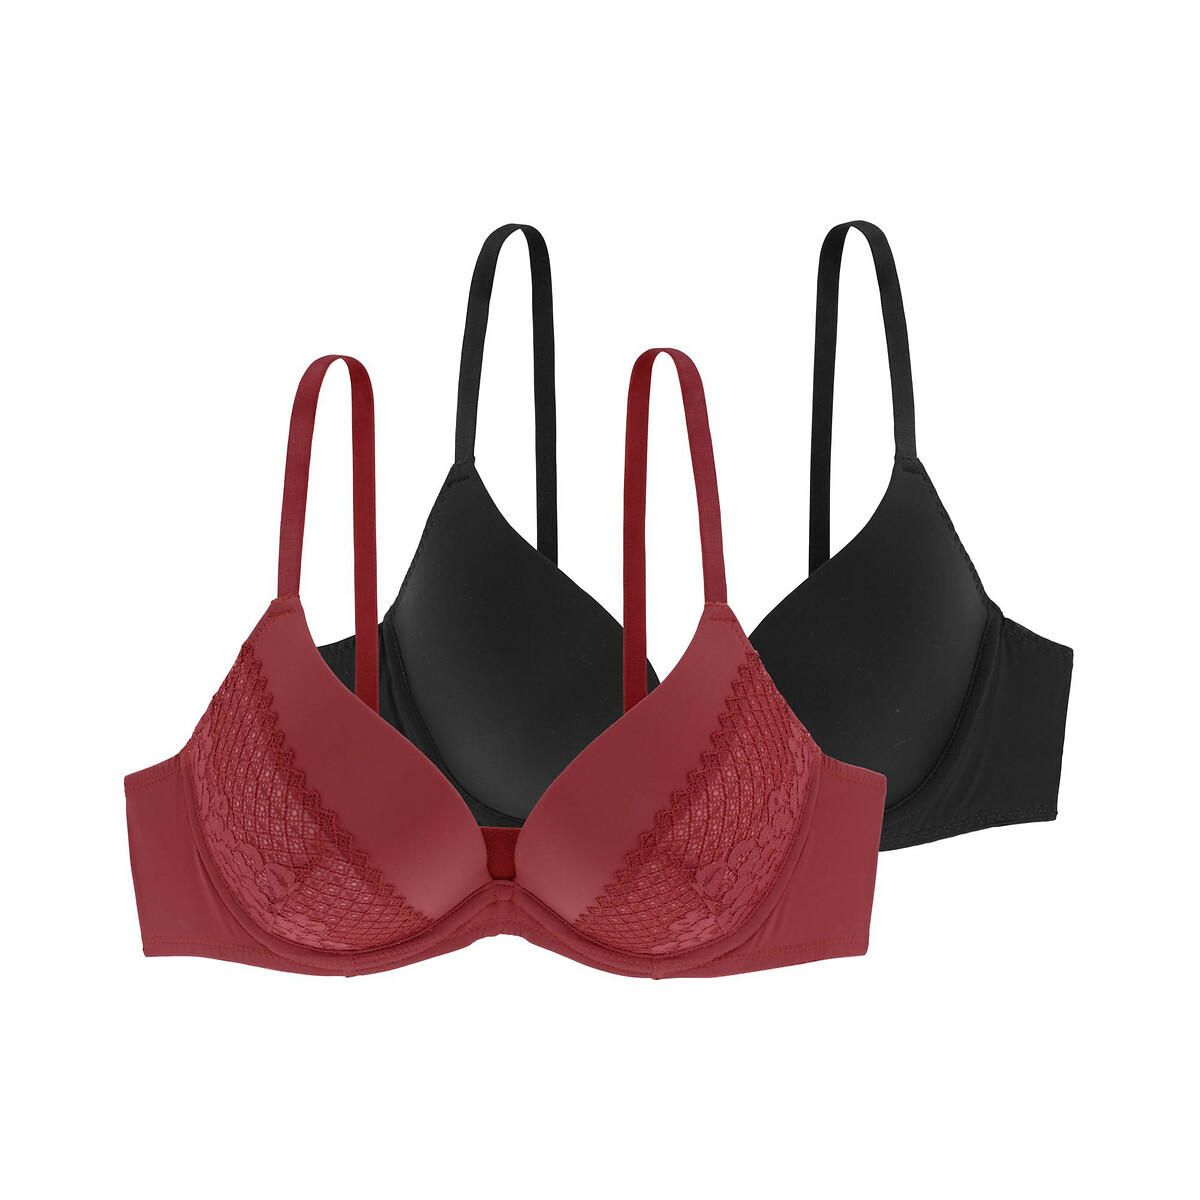 Pack of 2 kelsea recycled push-up bras red/black Dorina